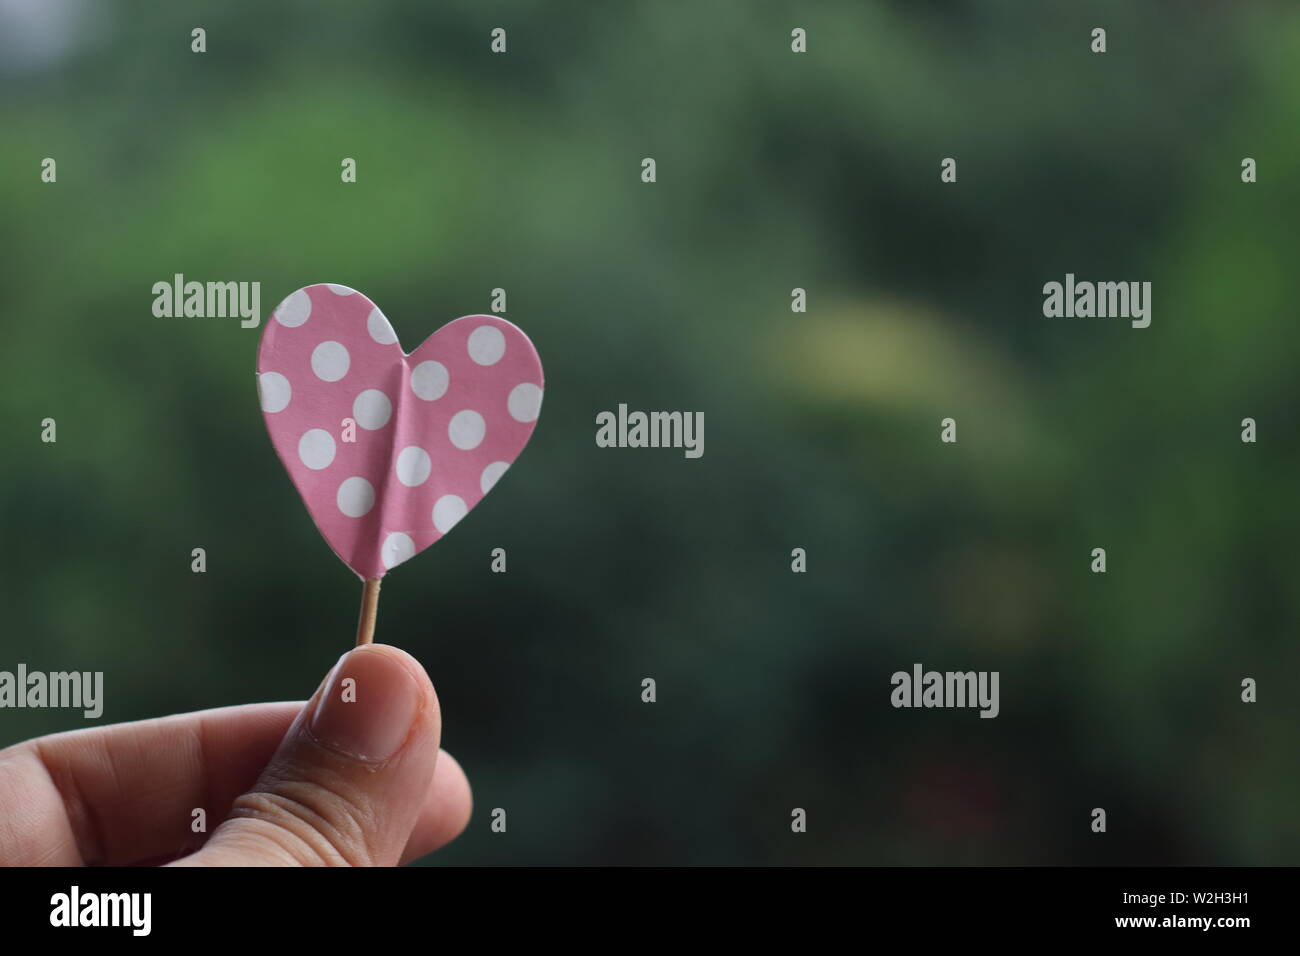 Hand holding pink polka dot paper heart Stock Photo